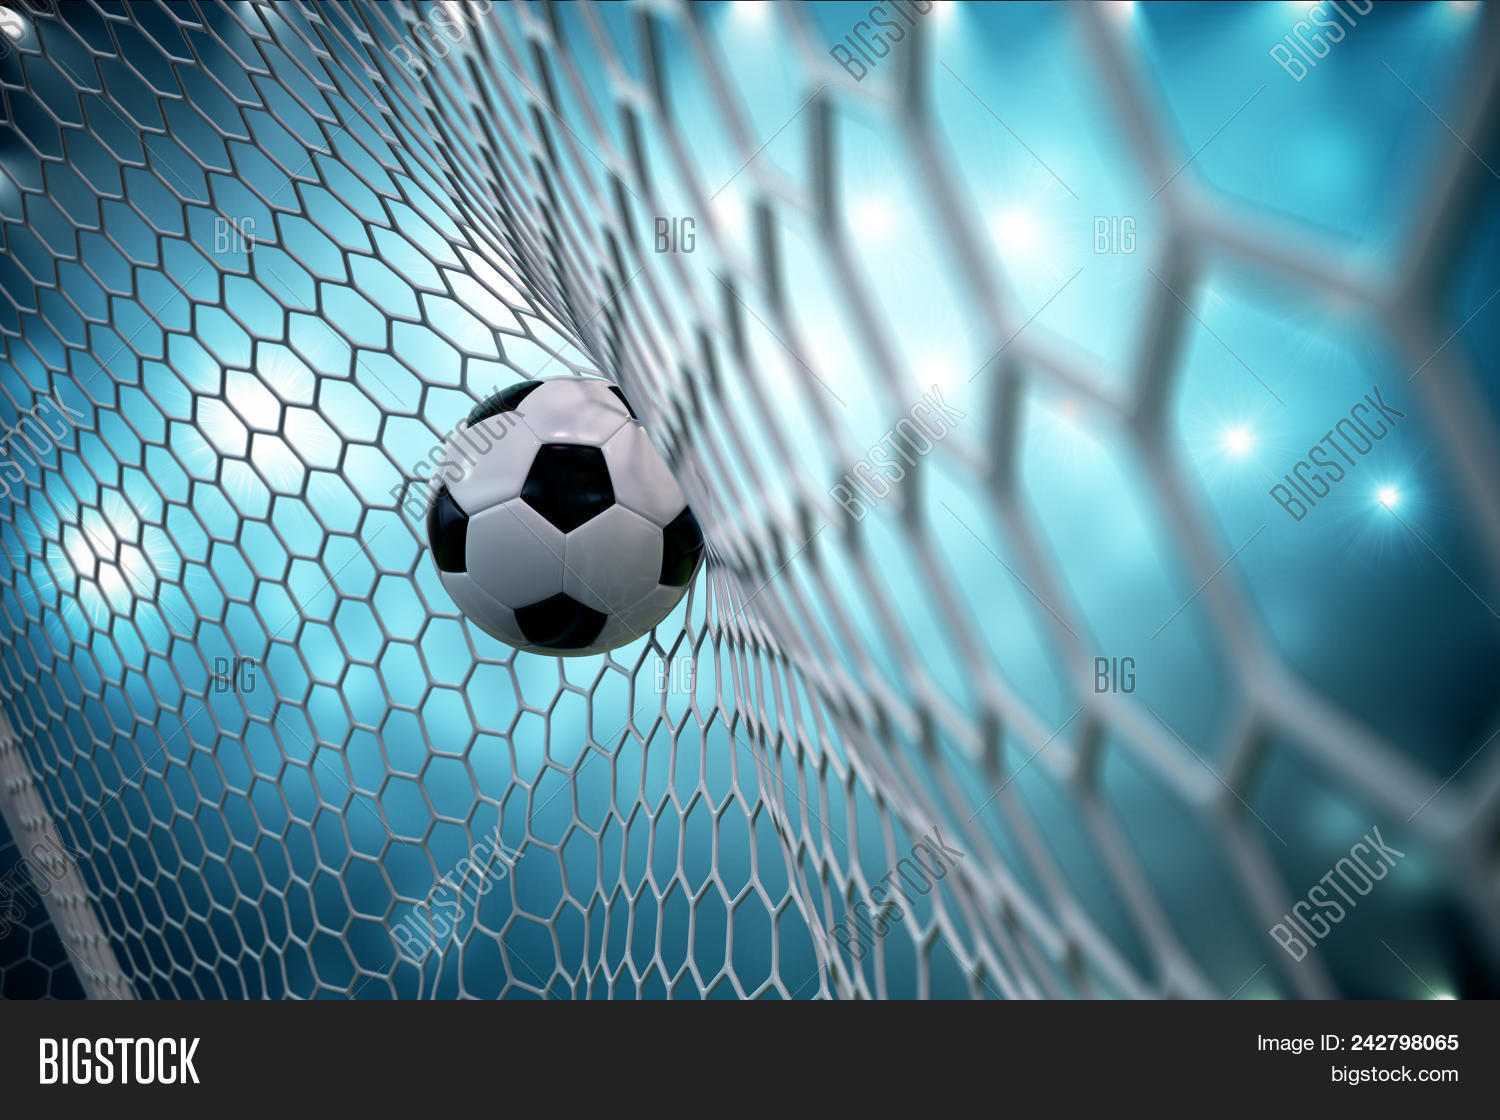 3d Rendering Soccer Image Photo Free Trial Bigstock